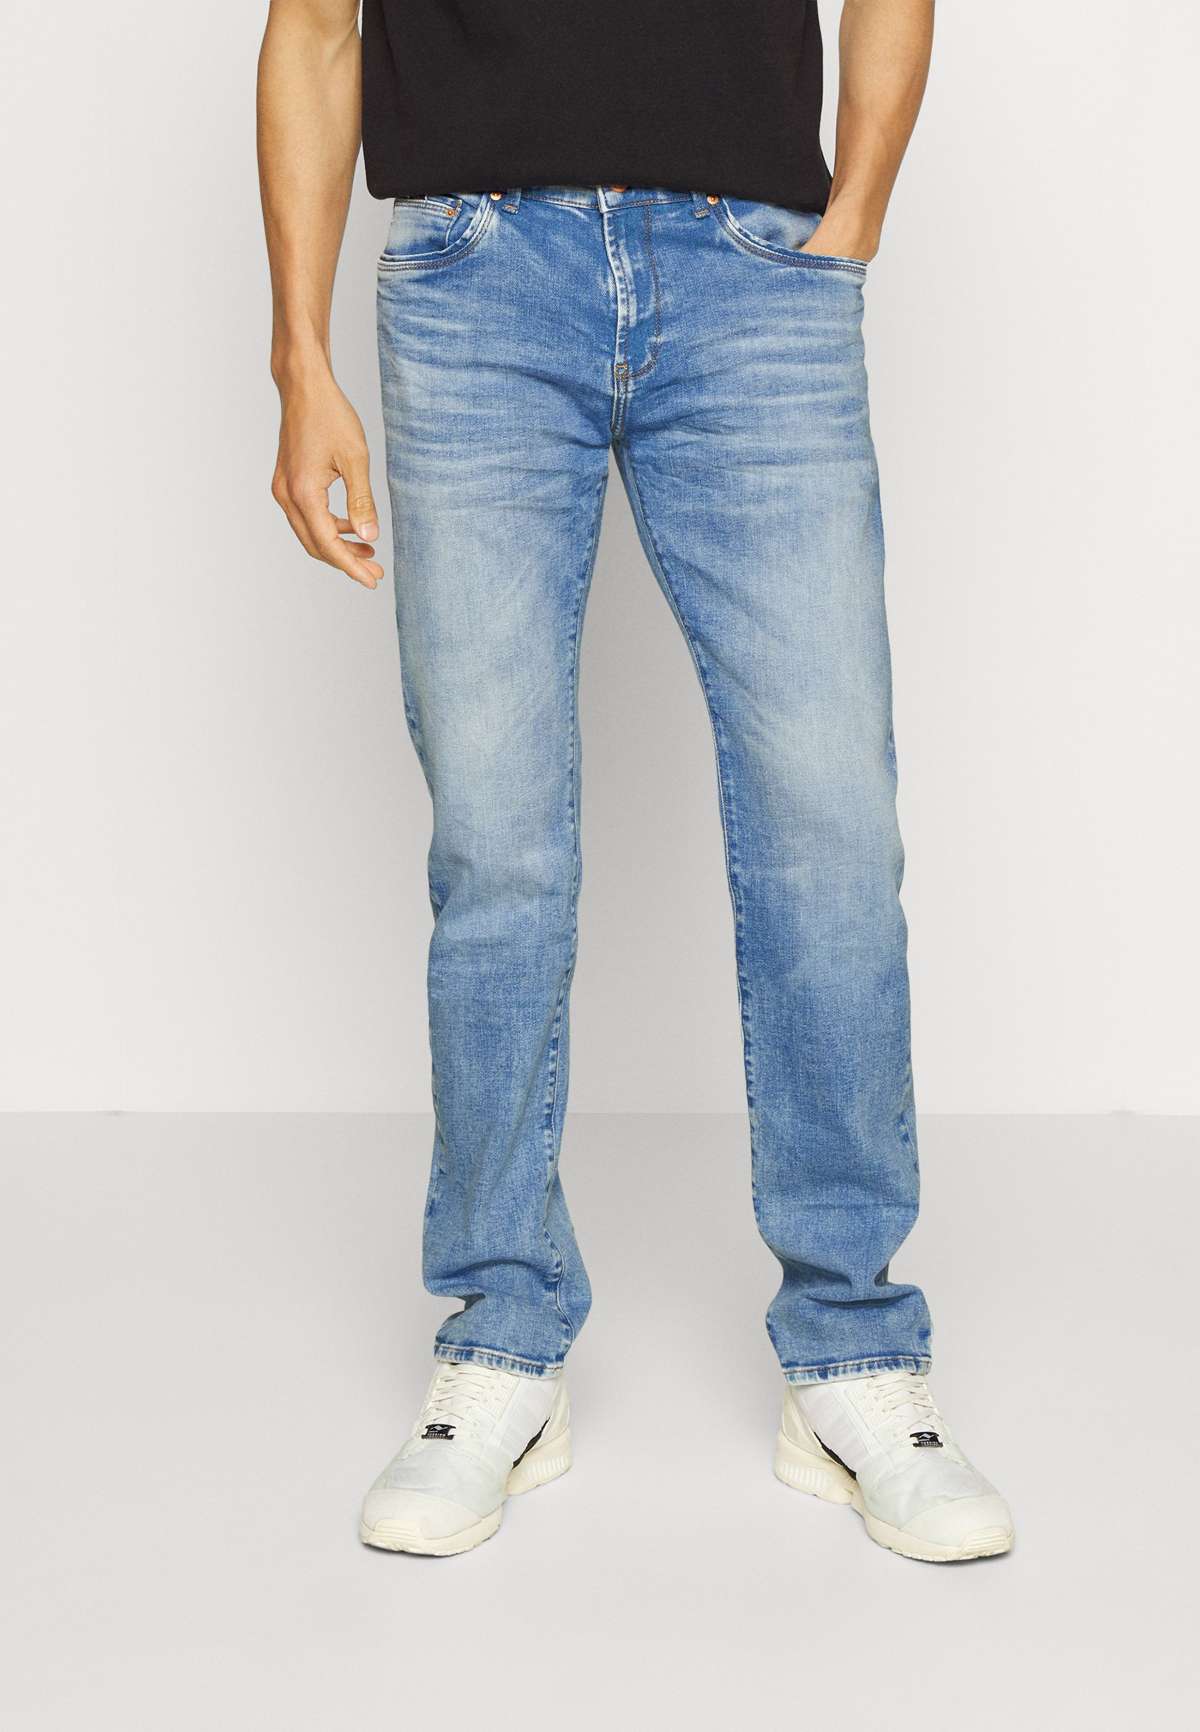 Джинсы LTB Hollywood Z D Savius Undamaged Wash Jeans Regular Fit